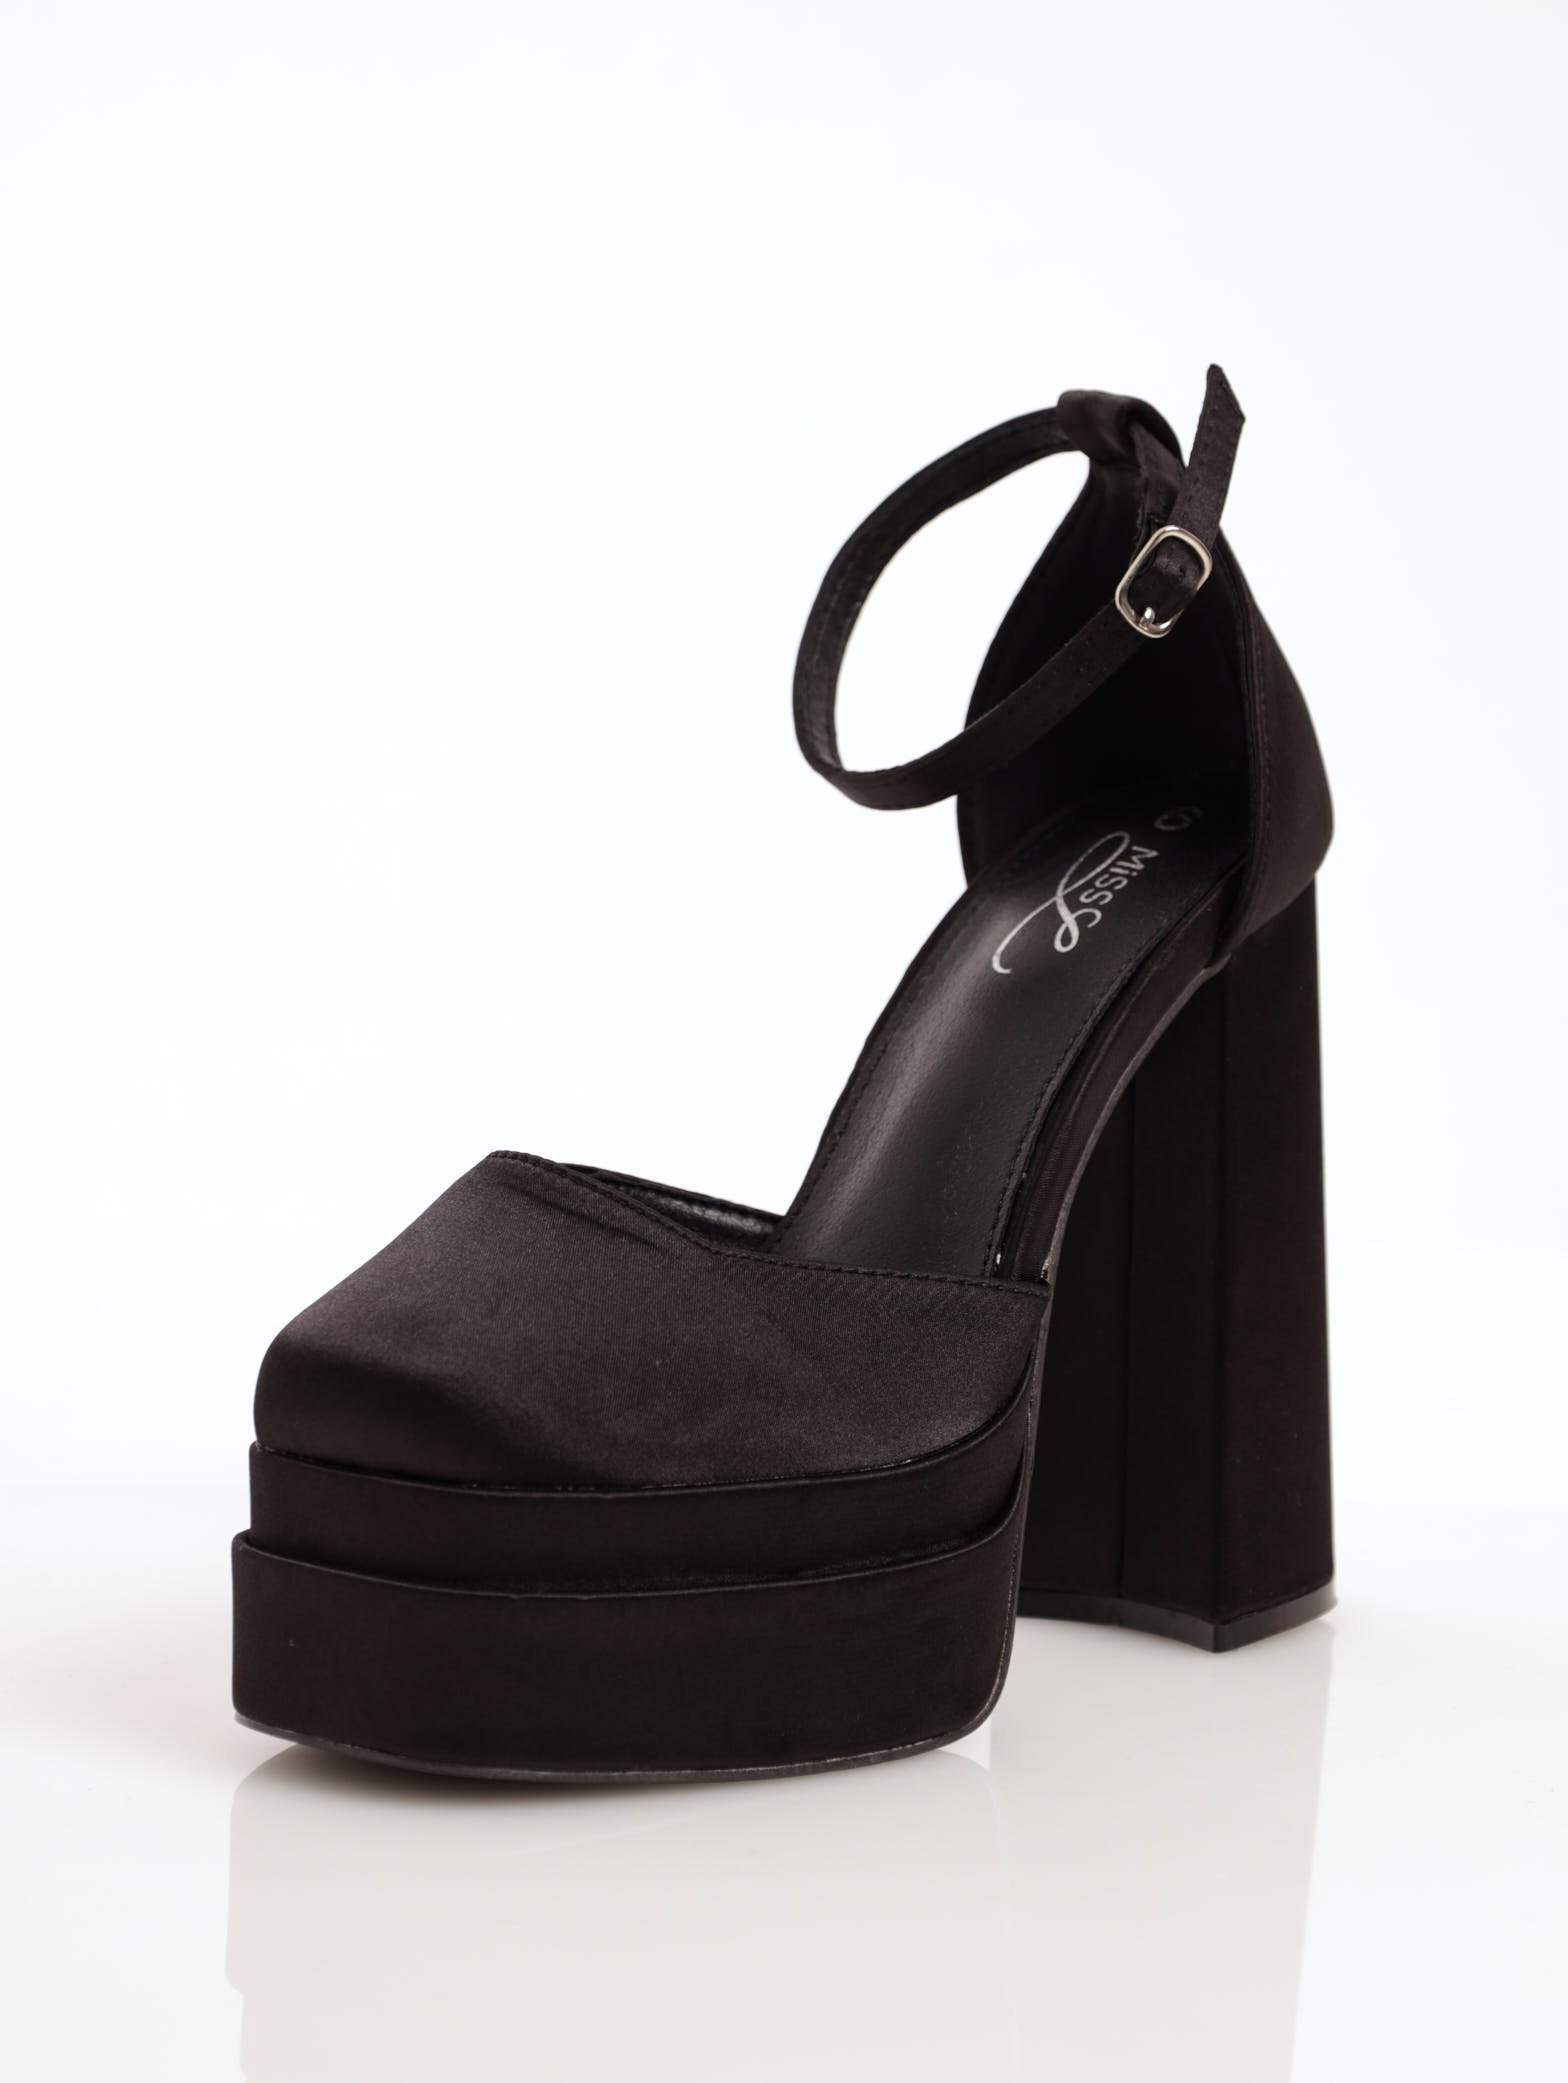 NEW pink double platform heels at Target! Buy or bye? I love them🤩💖 ... |  TikTok